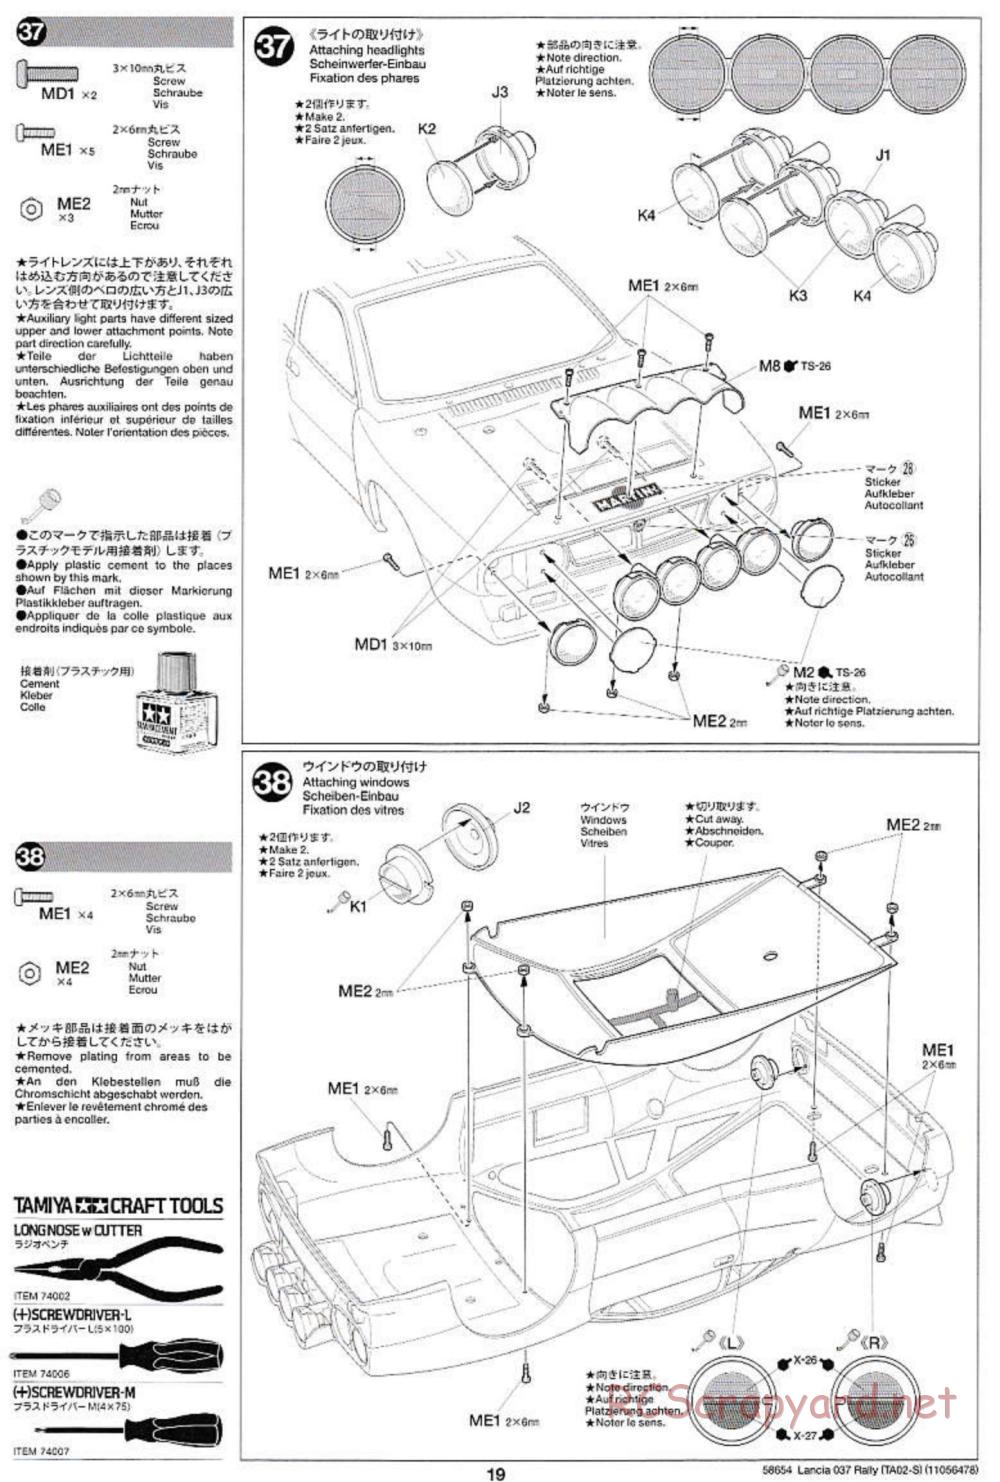 Tamiya - Lancia 037 Rally Chassis - Manual - Page 19